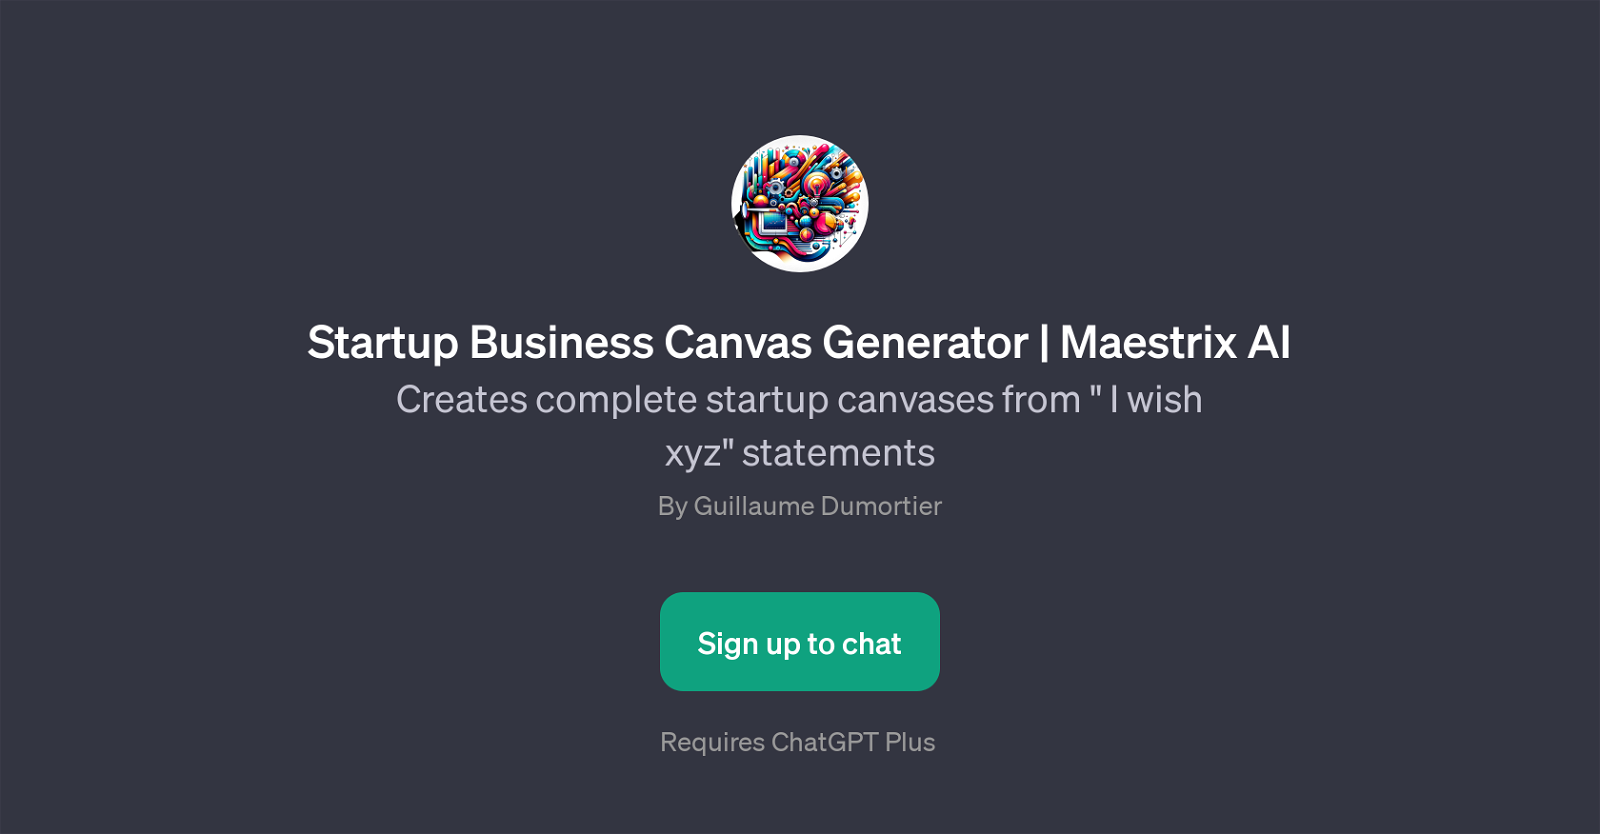 Startup Business Canvas Generator website